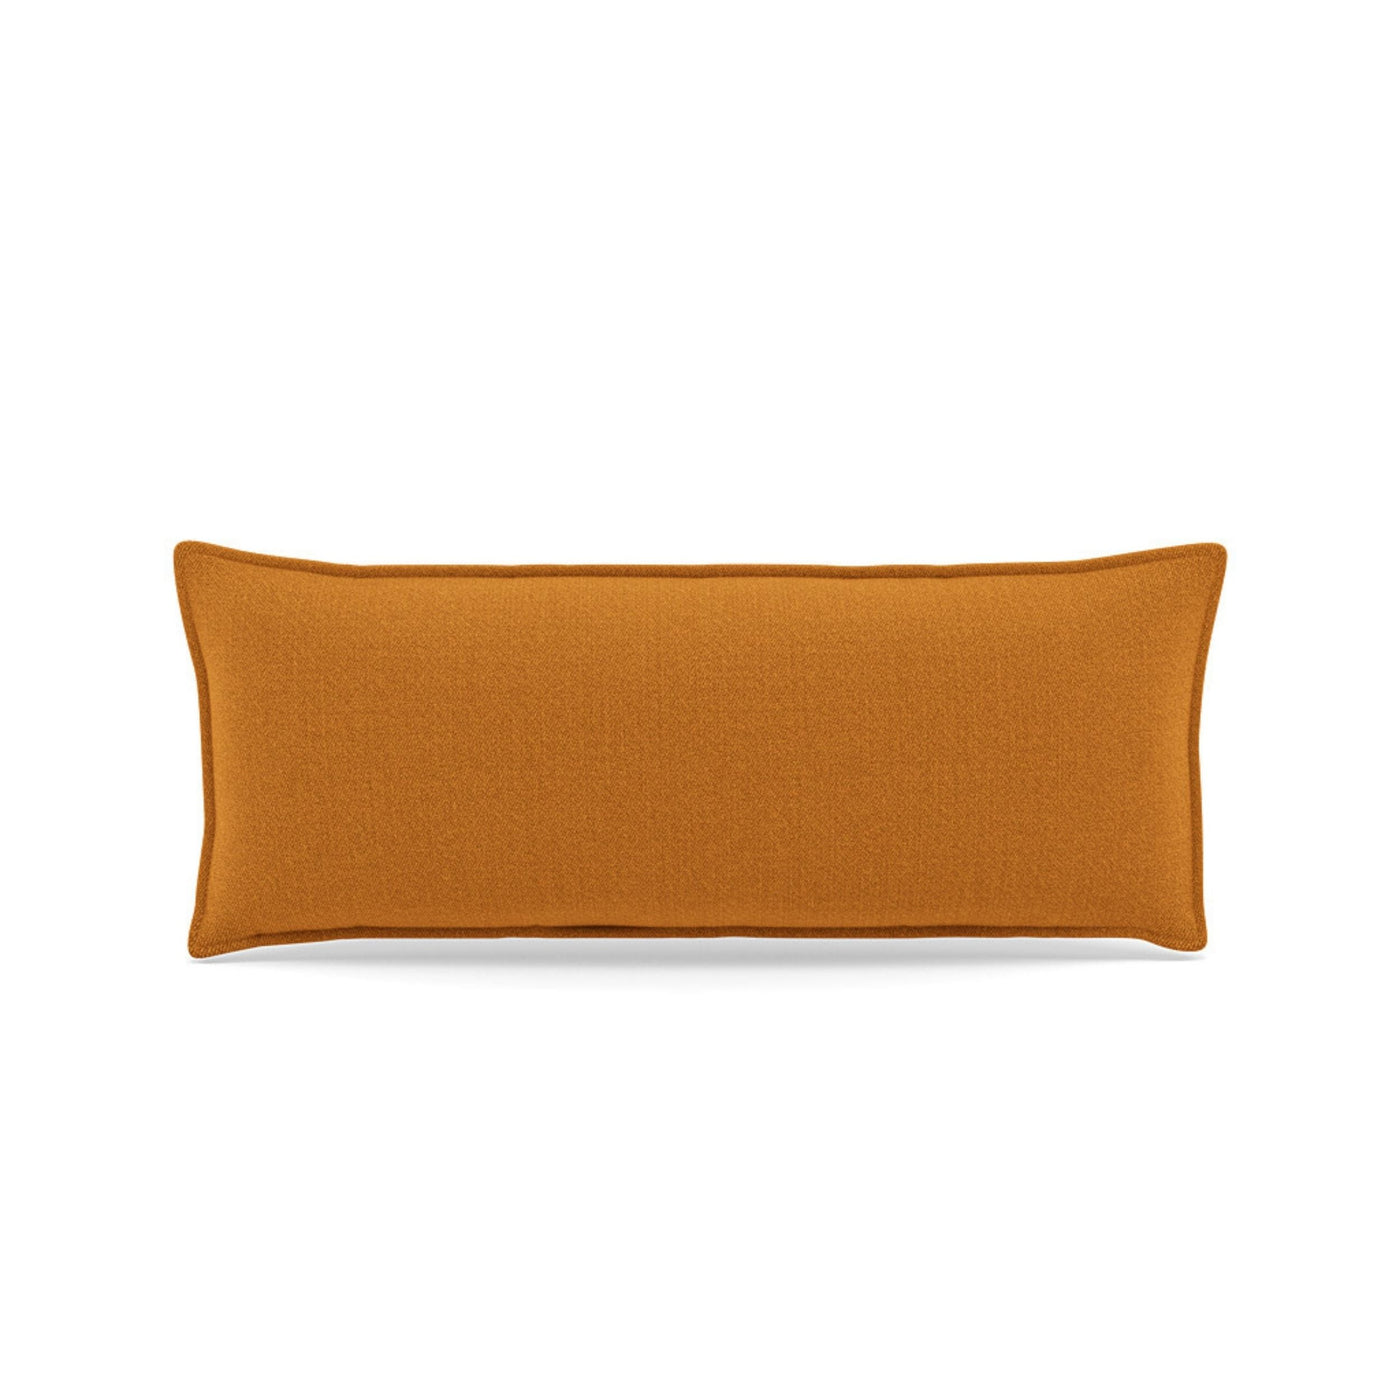 Muutos In Situ Cushion for the In Situ Modular Sofa series in vidar 472, 70x30cm. Made to order from someday designs. #colour_vidar-472